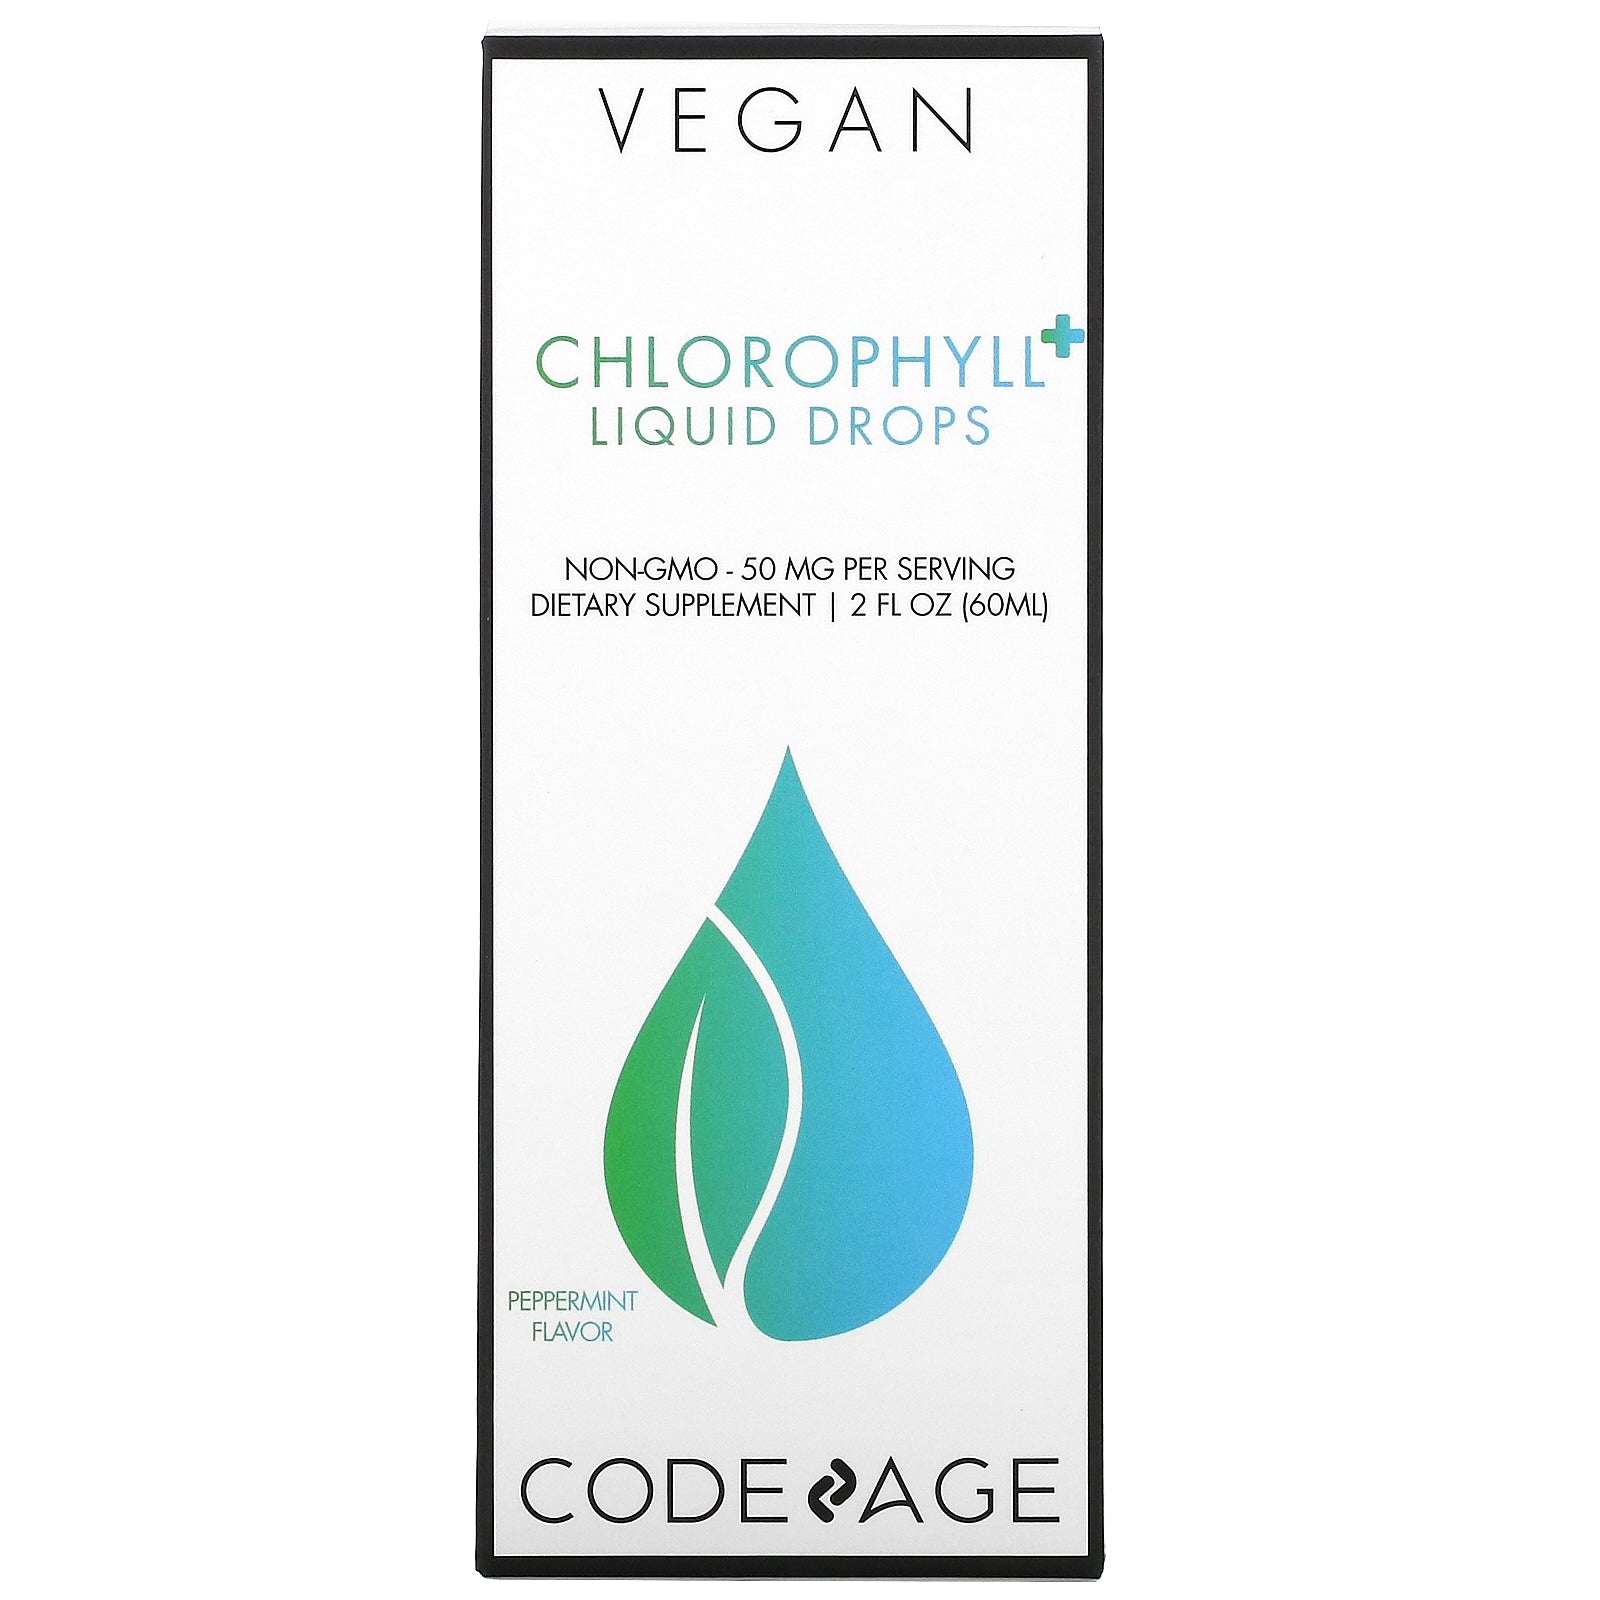 CodeAge, Vegan Chlorophyll+ Liquid Drops, Peppermint, 50 mg (60 ml)